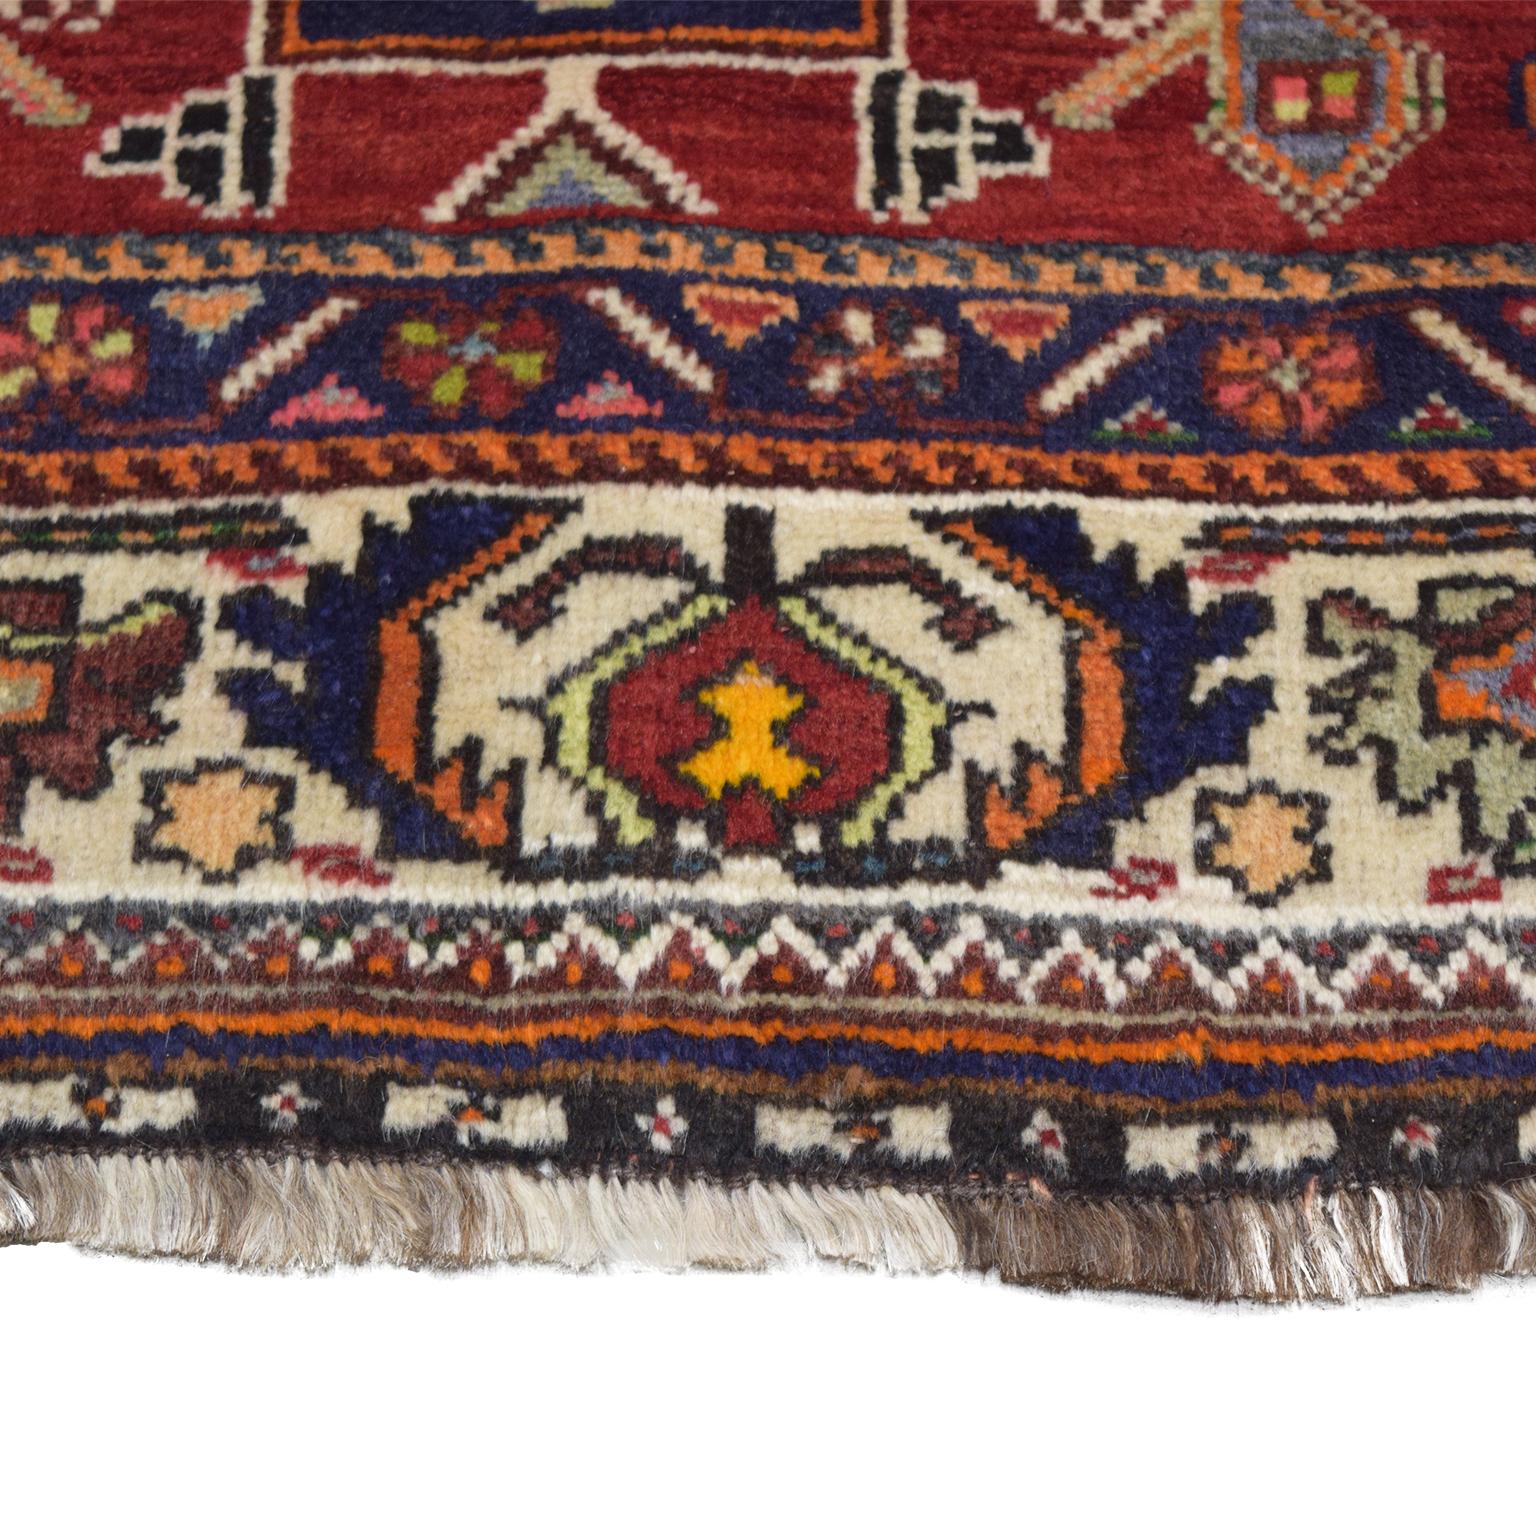 Vintage 1930s Wool Persian Kashkouli Tribal Rug, 4' x 6' For Sale 1